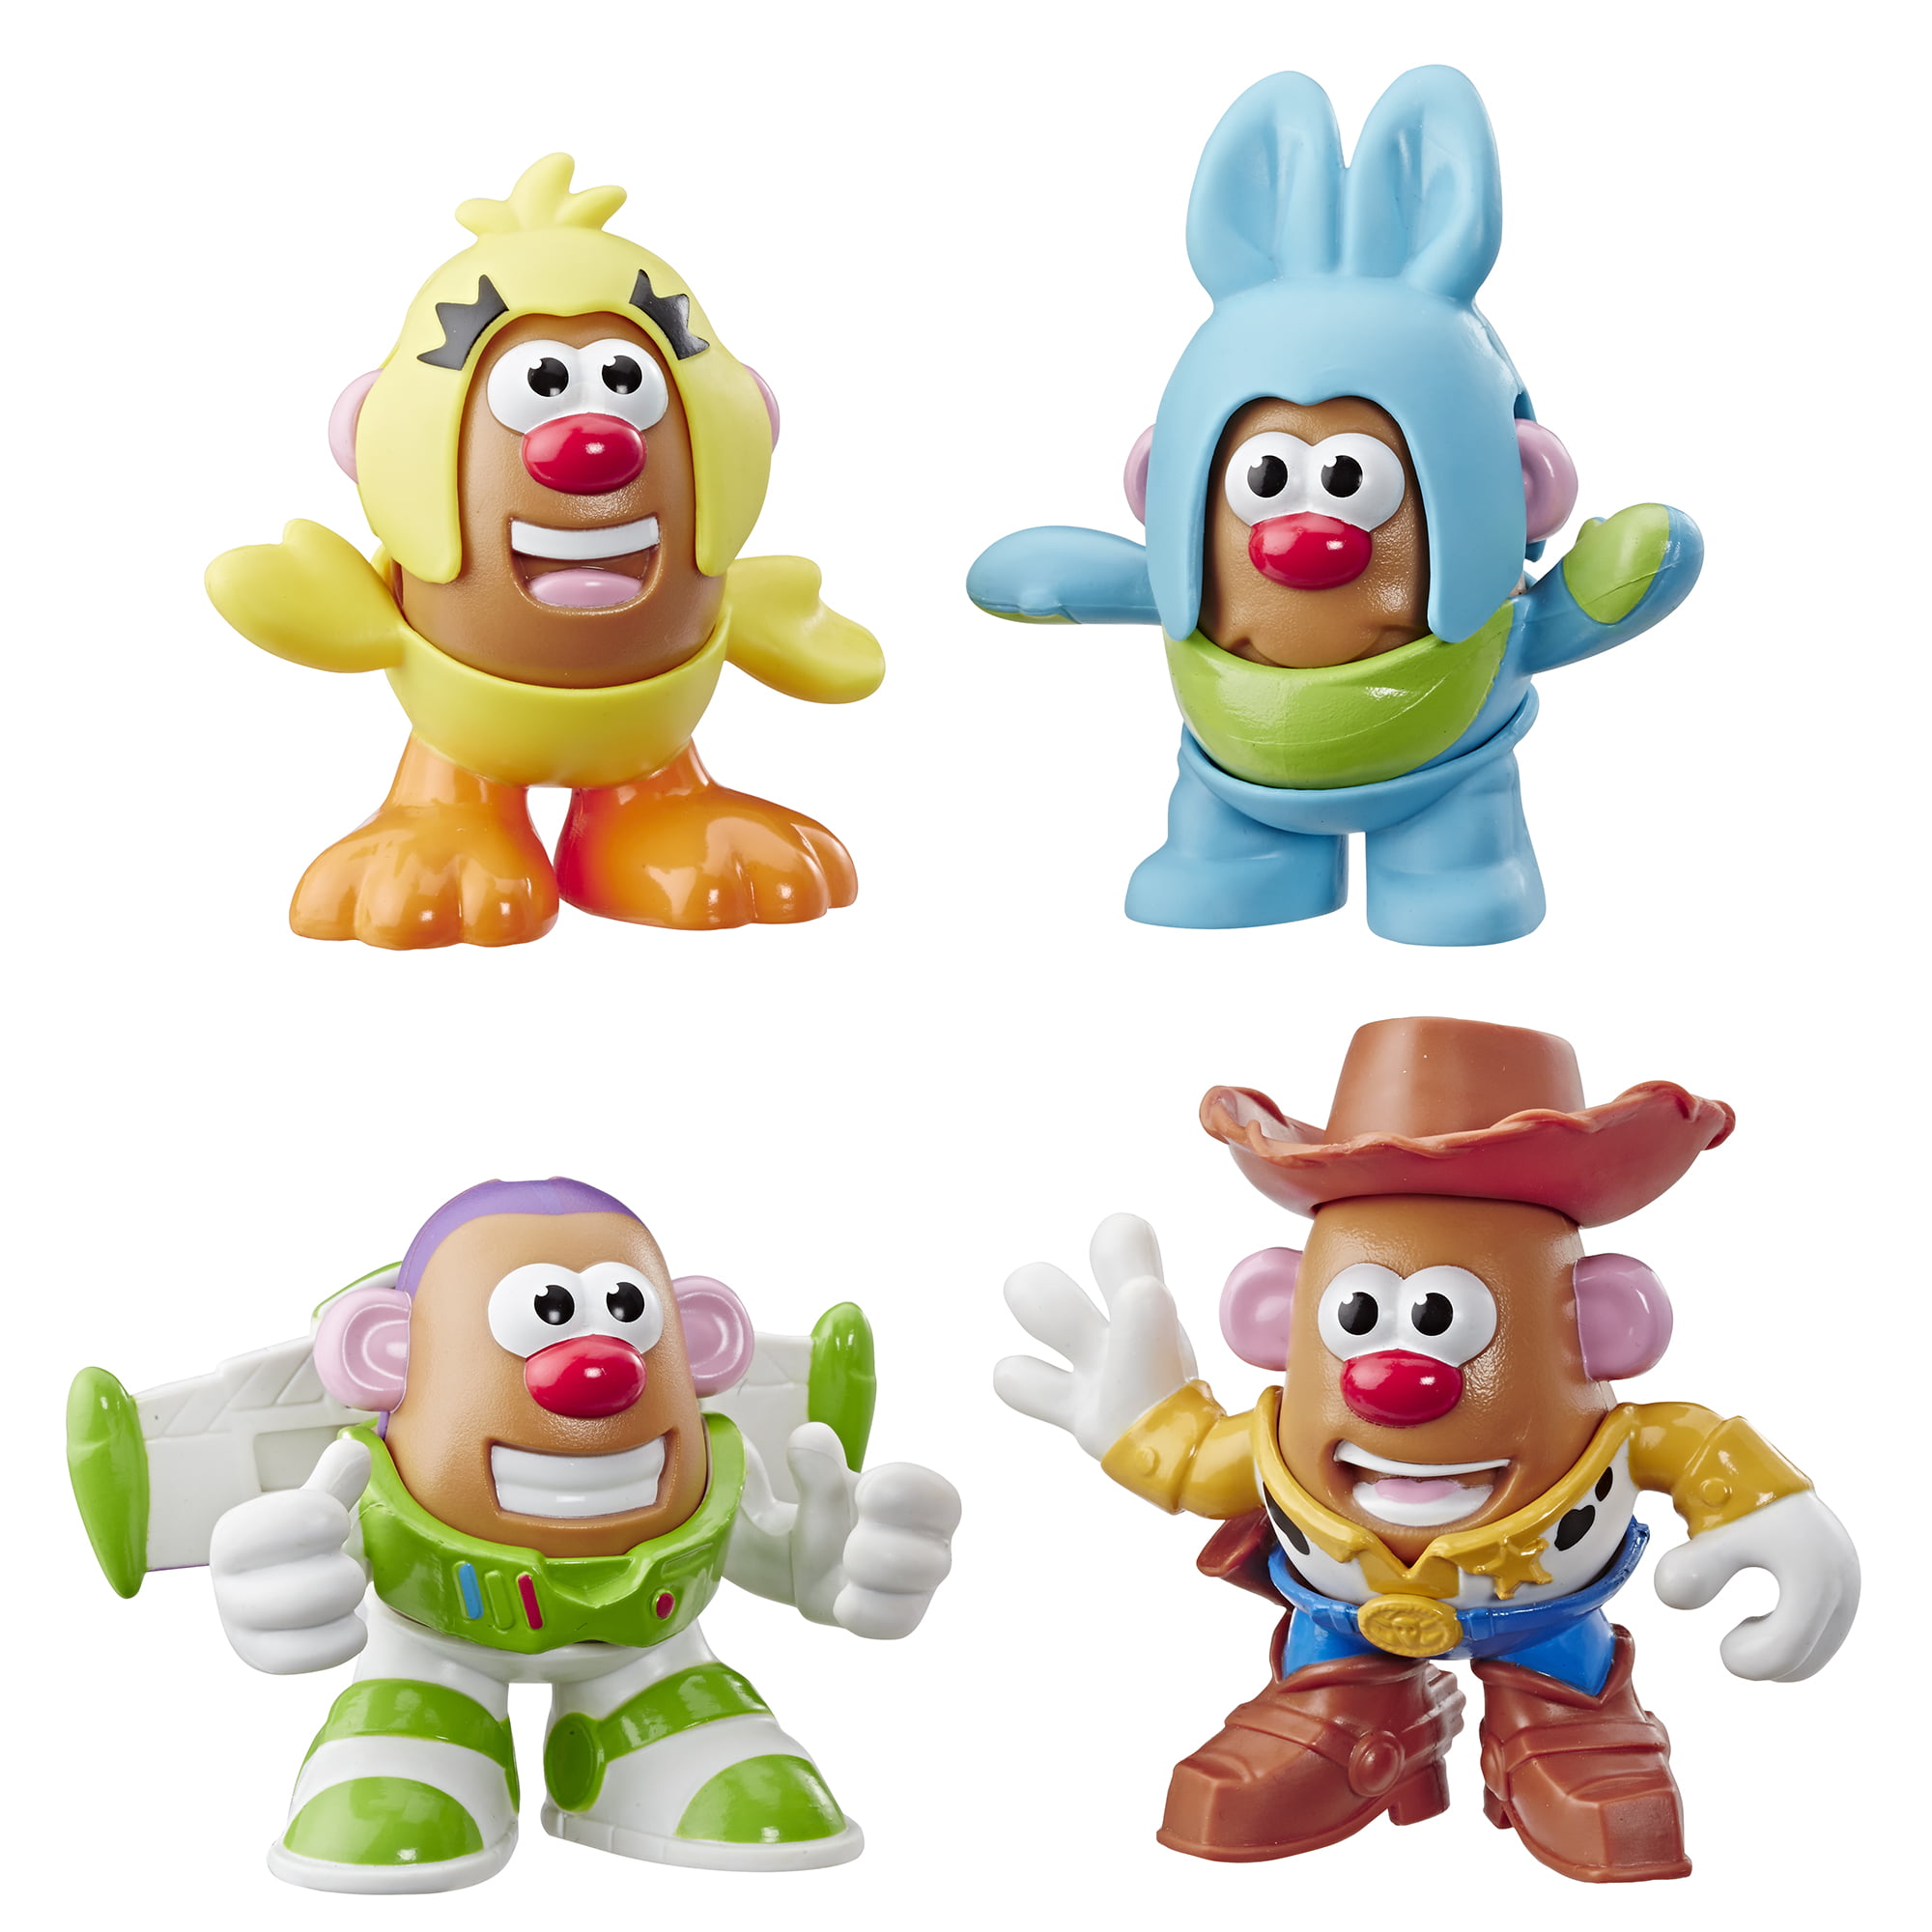 Disney Pixar Toy Story 4 Mr Potato Head Mini 4 Pack Walmart Com